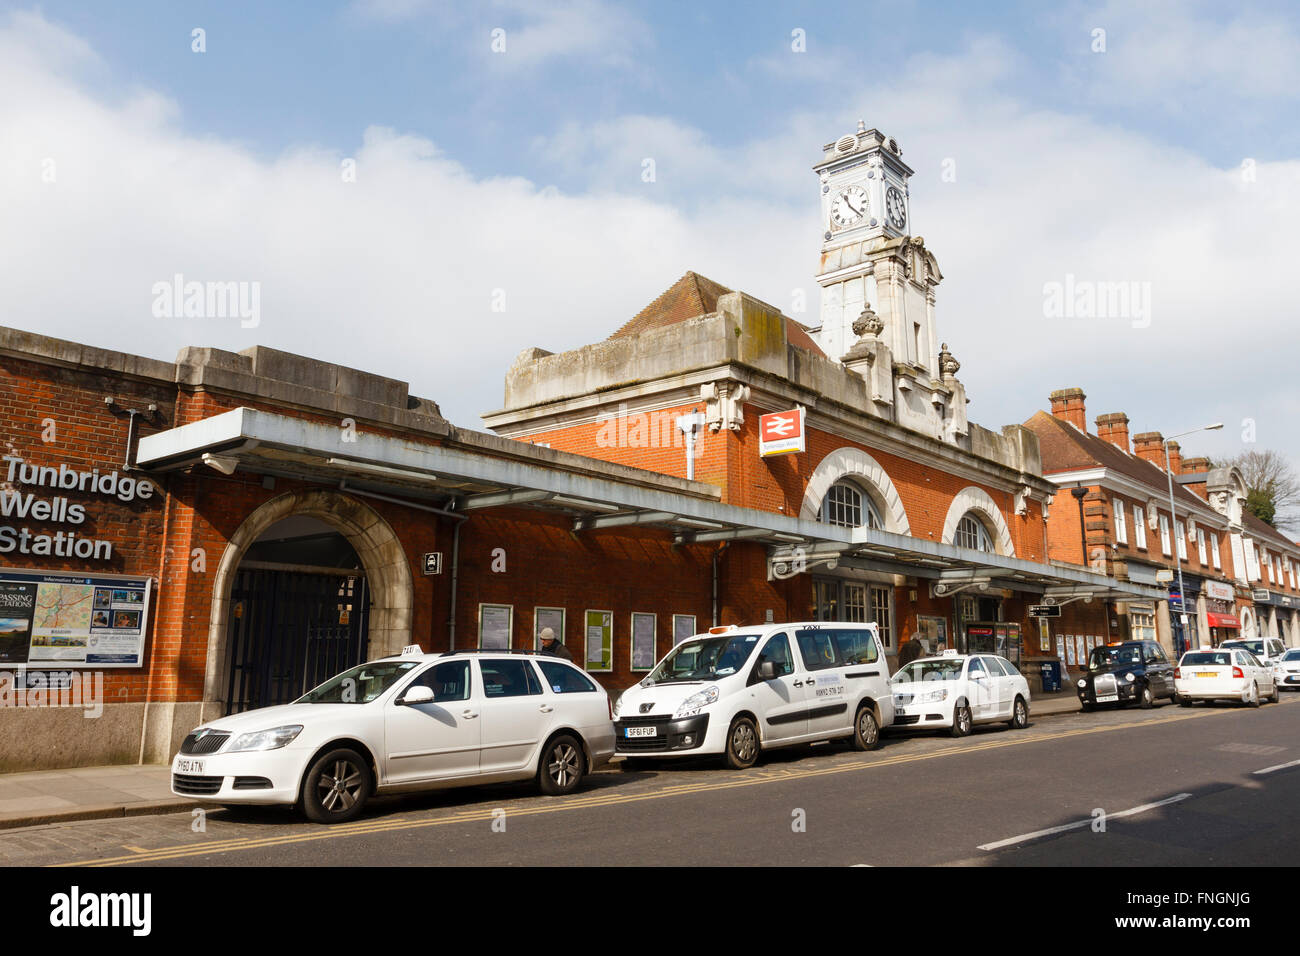 Taxi rank at Tunbridge Wells railway station, Kent, England, UK Stock Photo